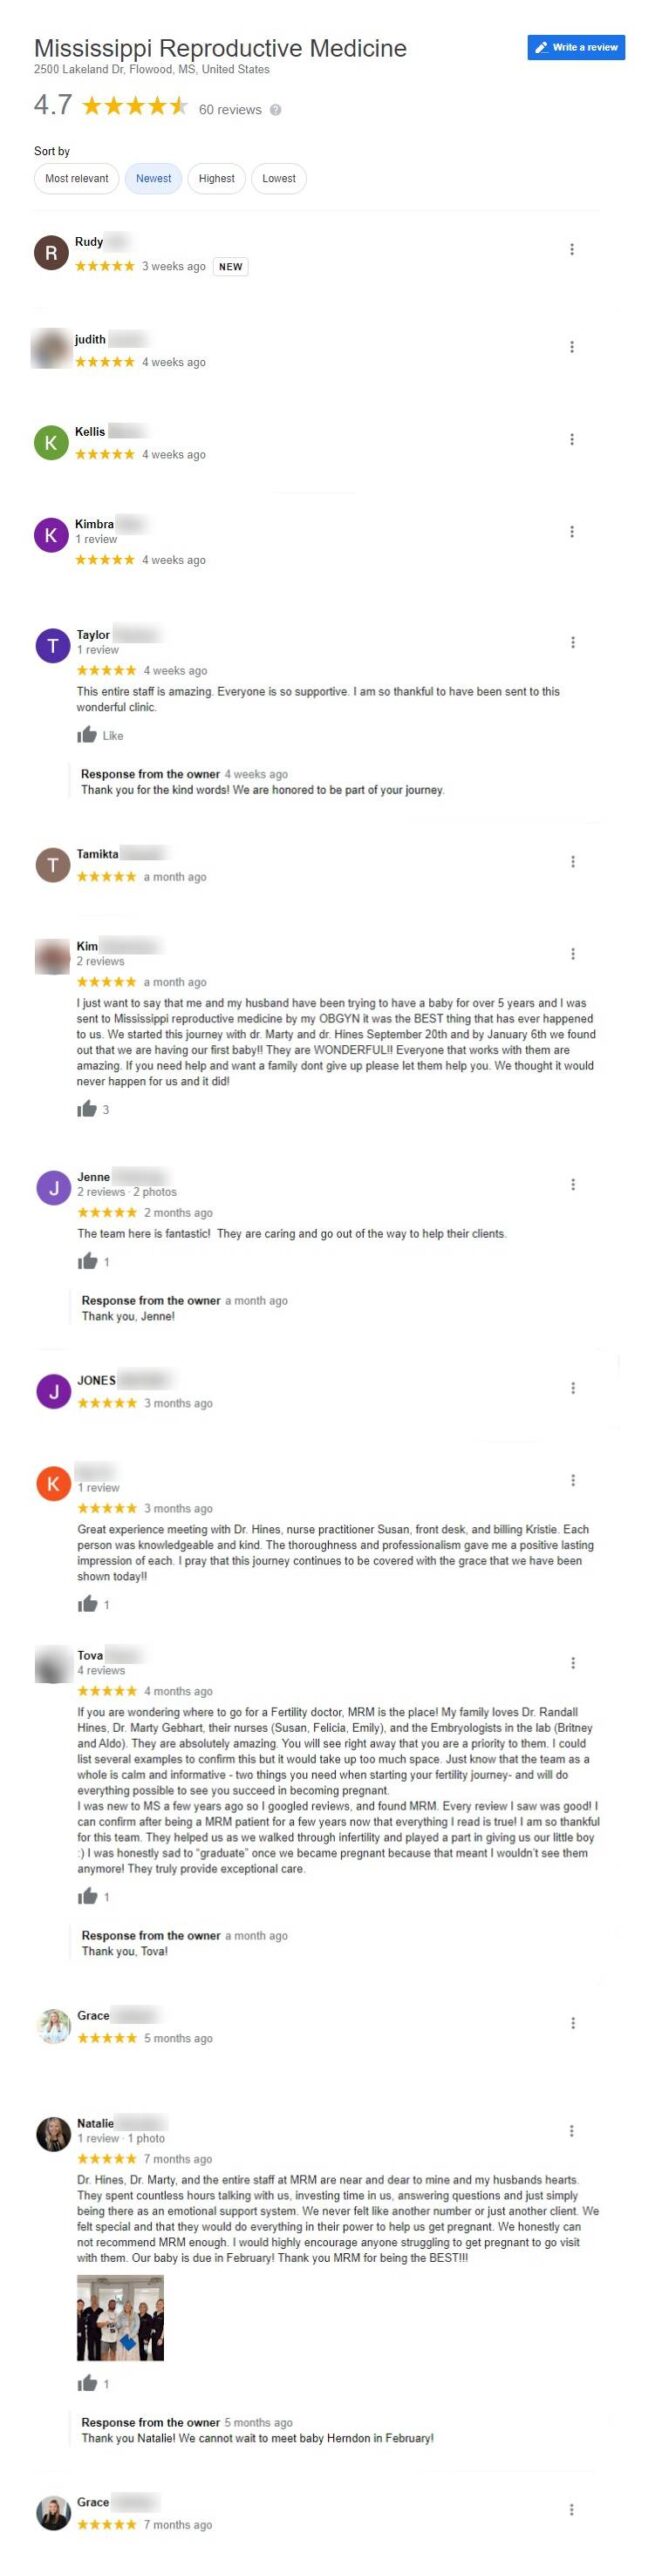 Reviews on Mississippi